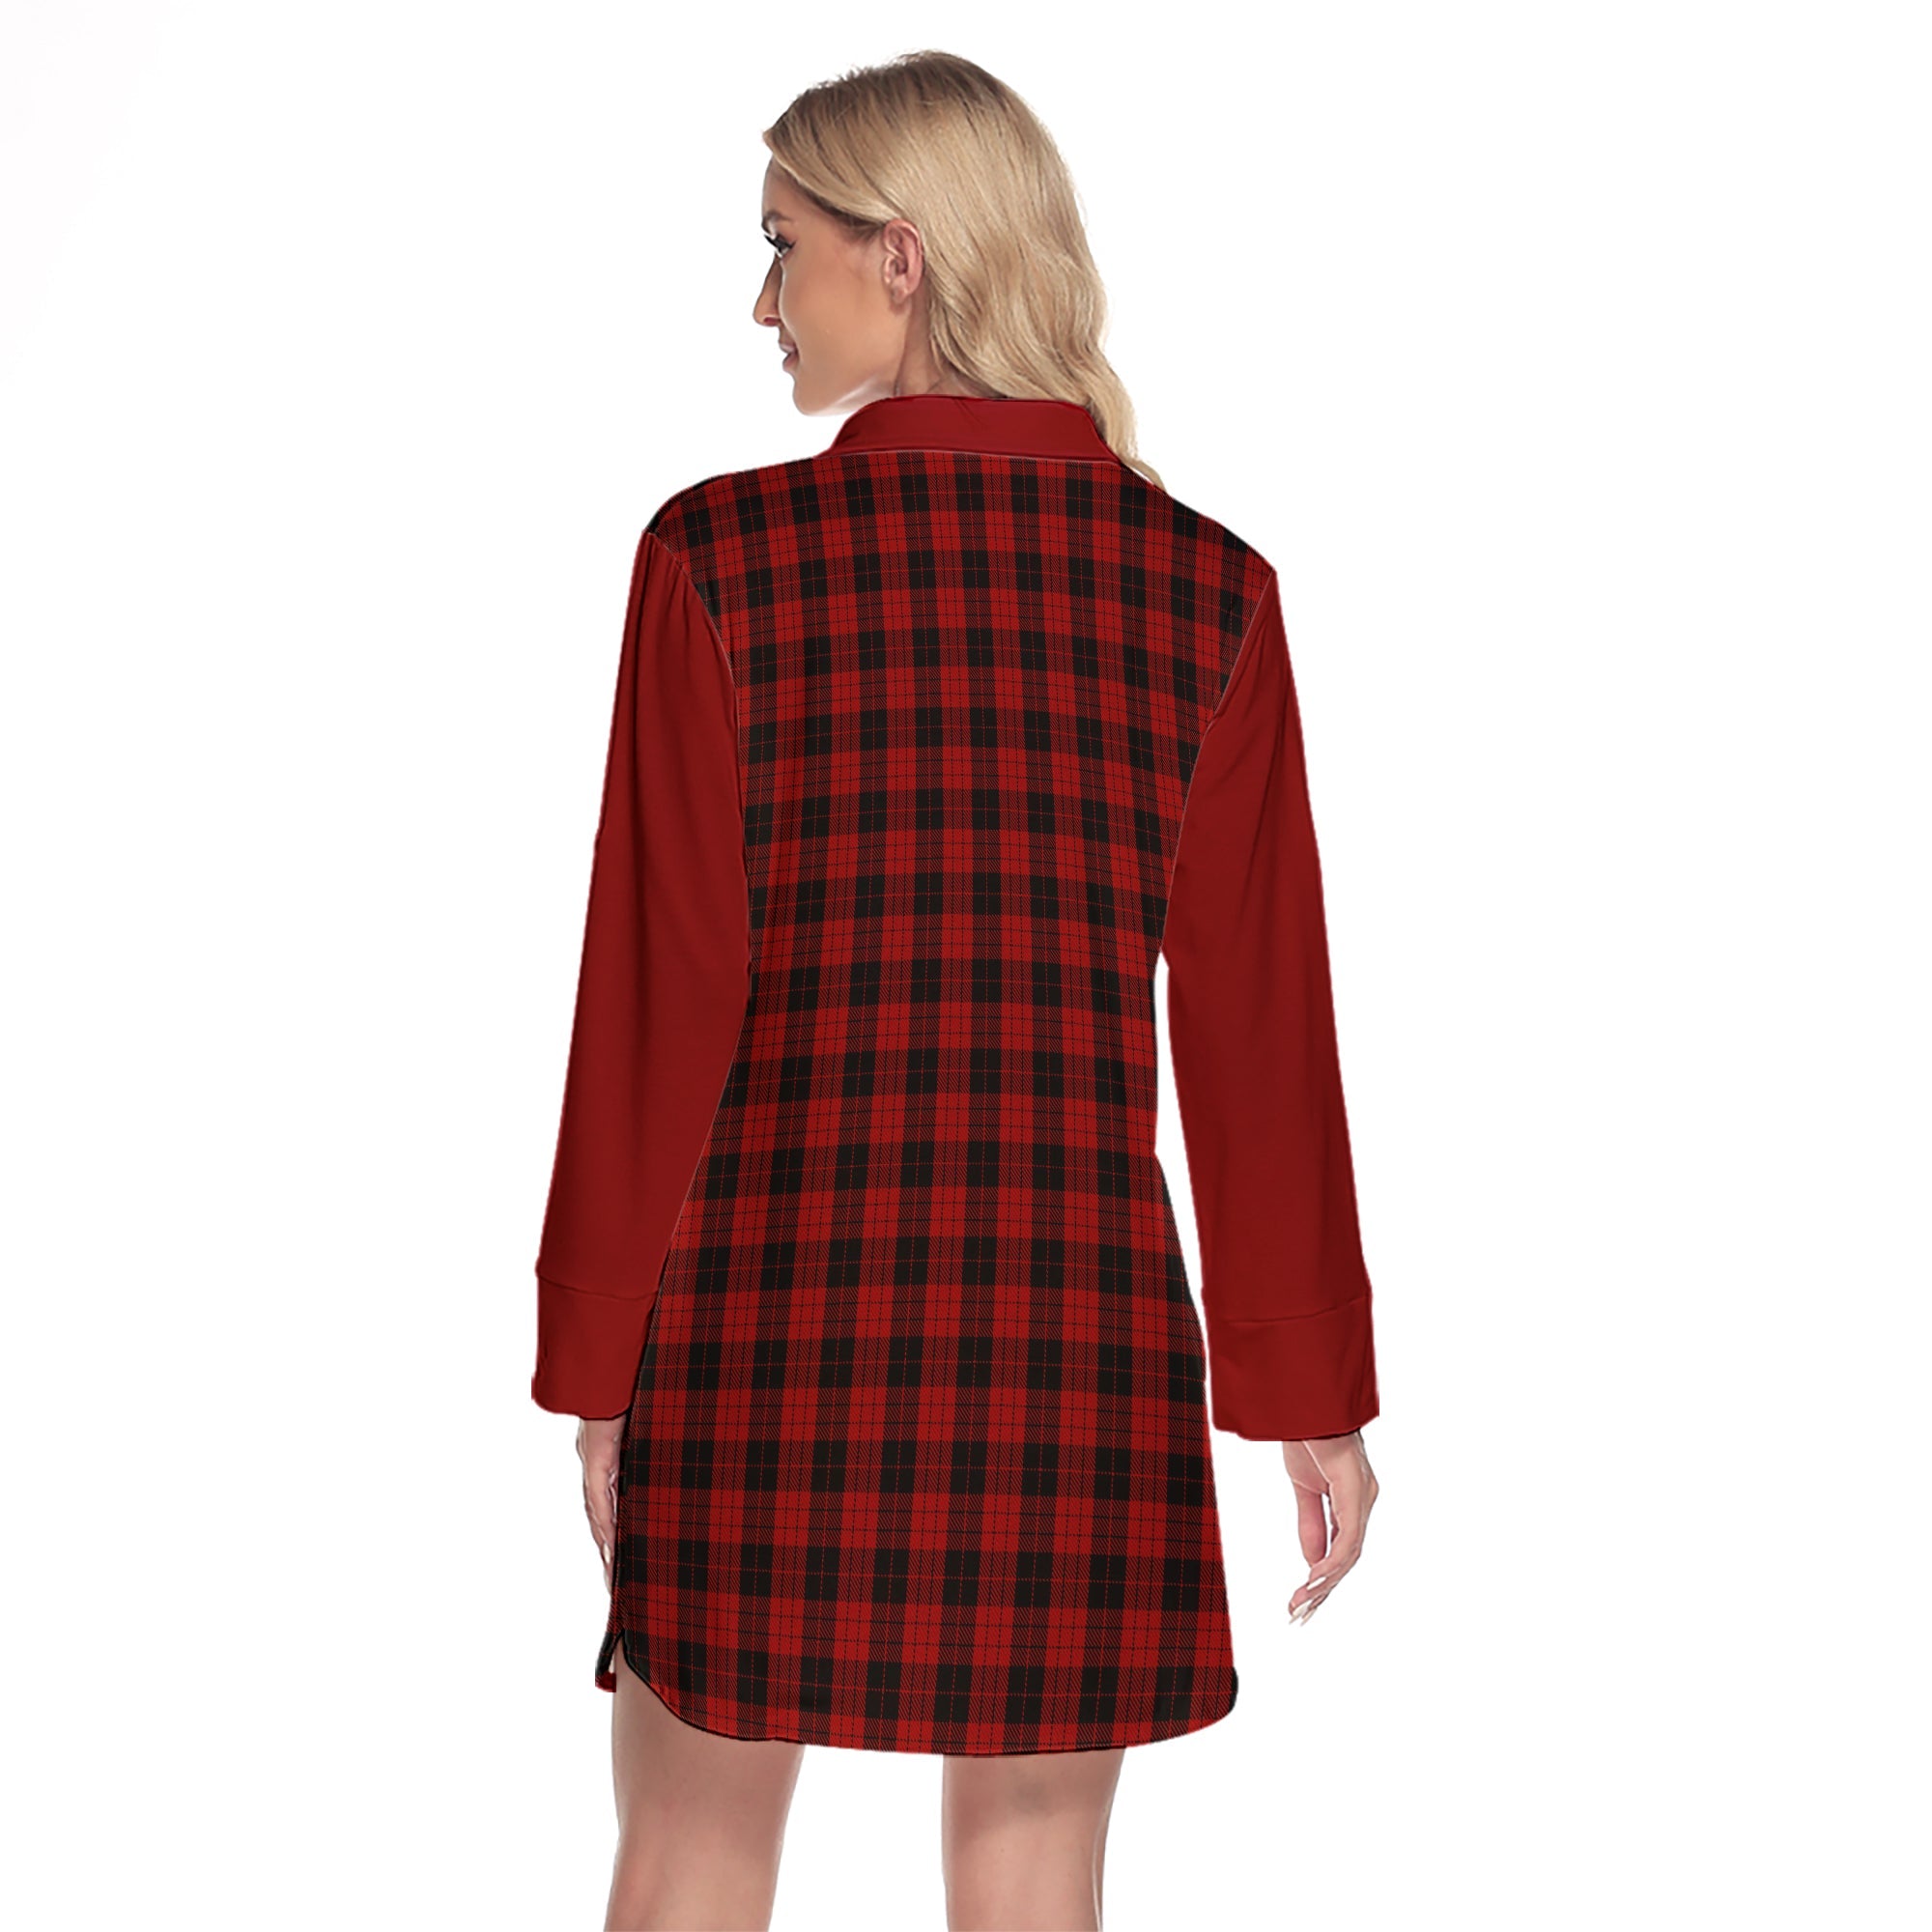 MacLeod Black And Red Tartan Women's Lapel Shirt Dress With Long Sleeve